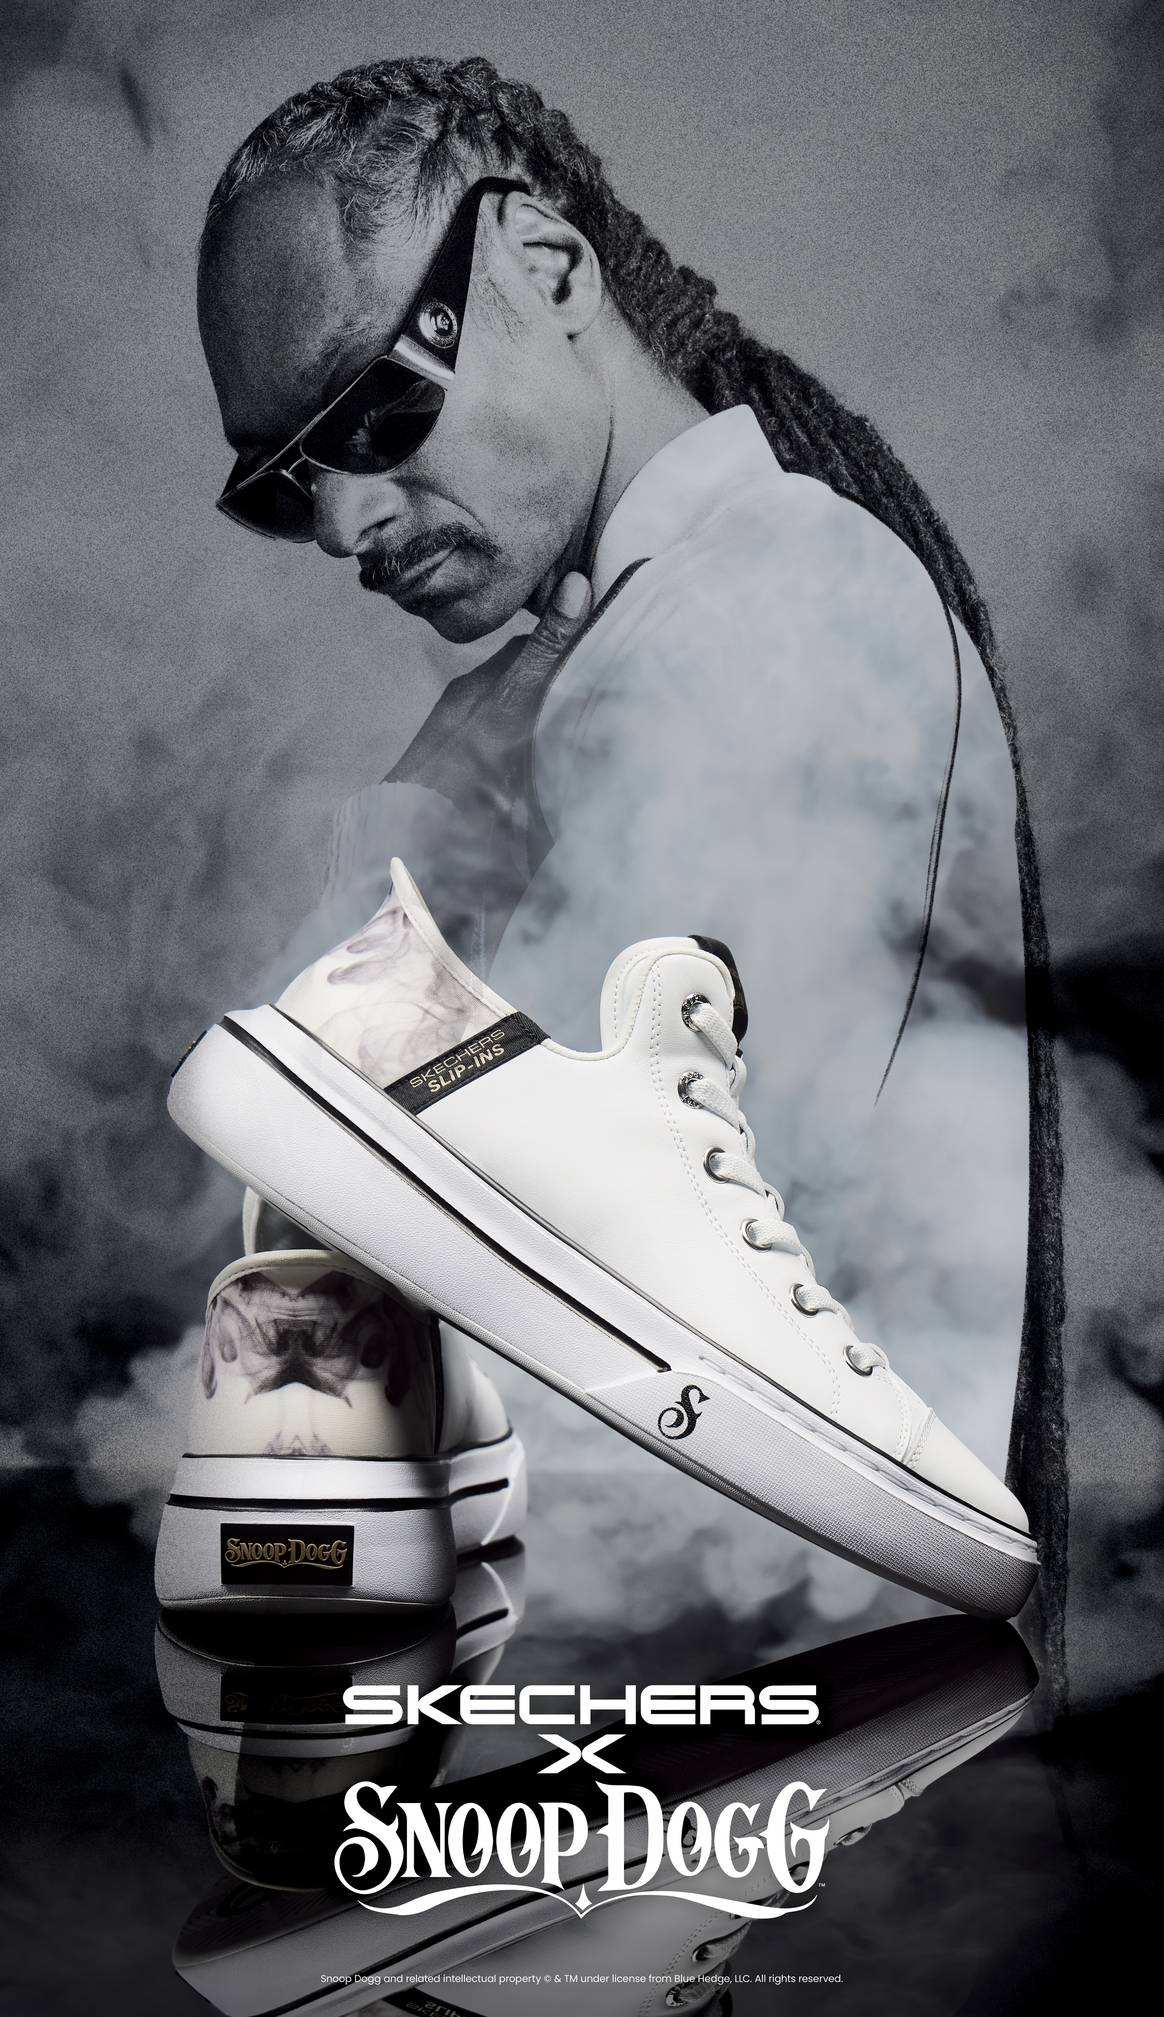 Skechers x Snoop Dogg collaboration